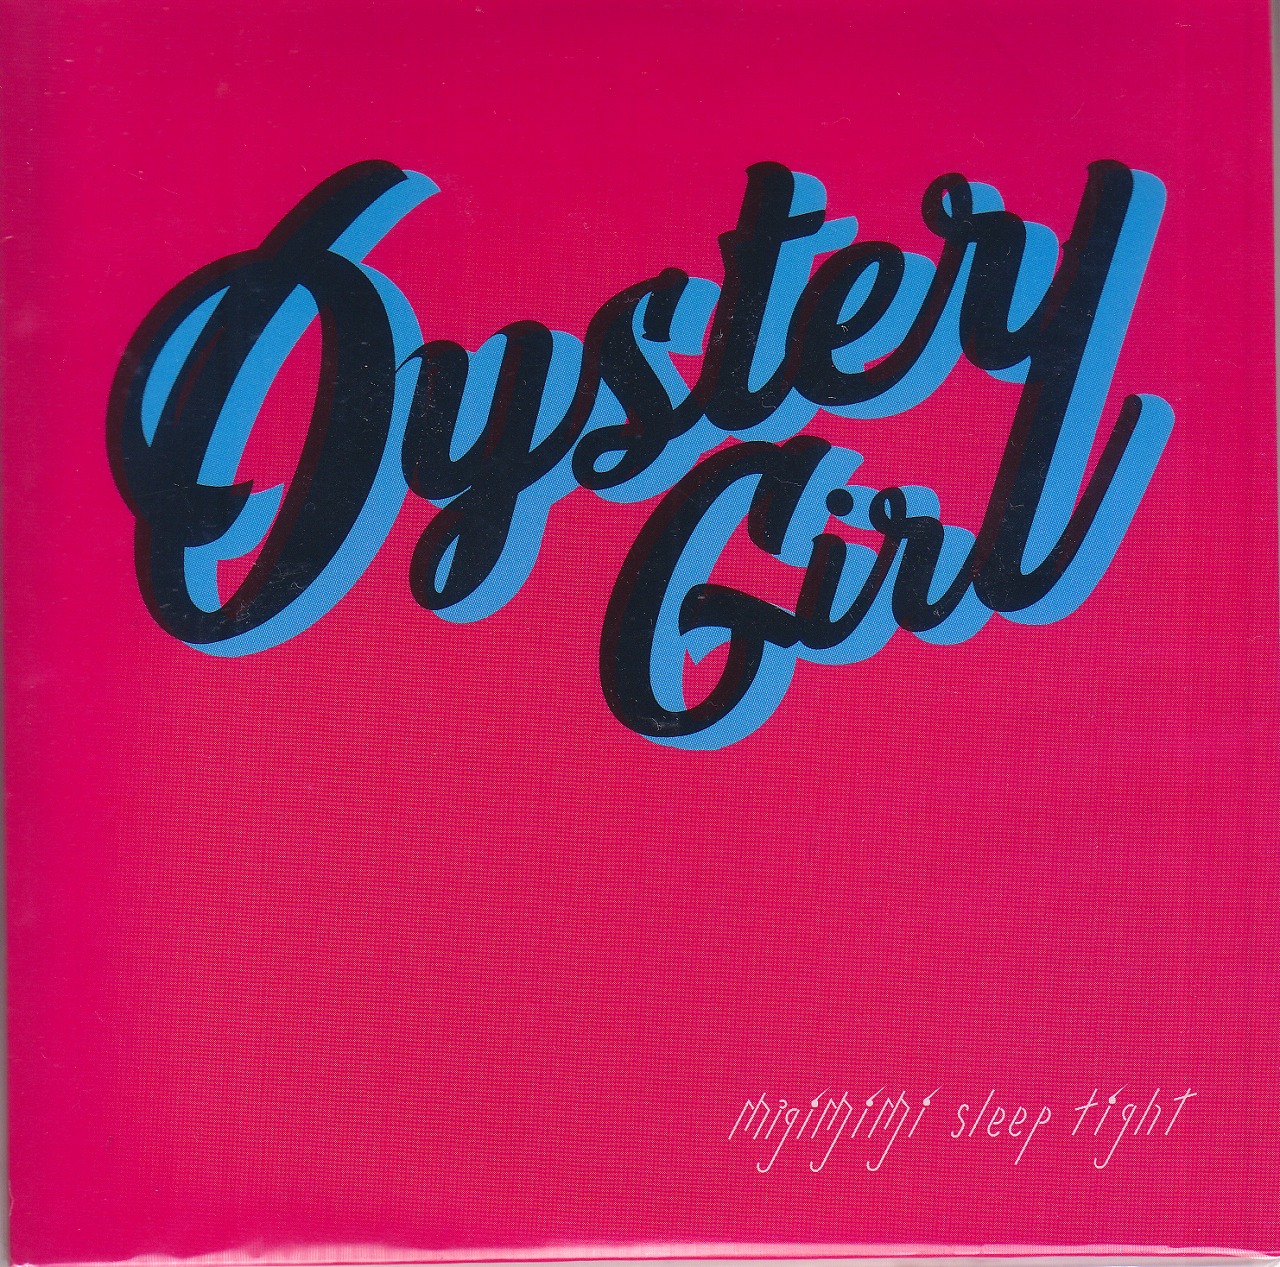 Migimimi sleep tight ( ミギミミスリープタイト )  の CD Oyster Girl